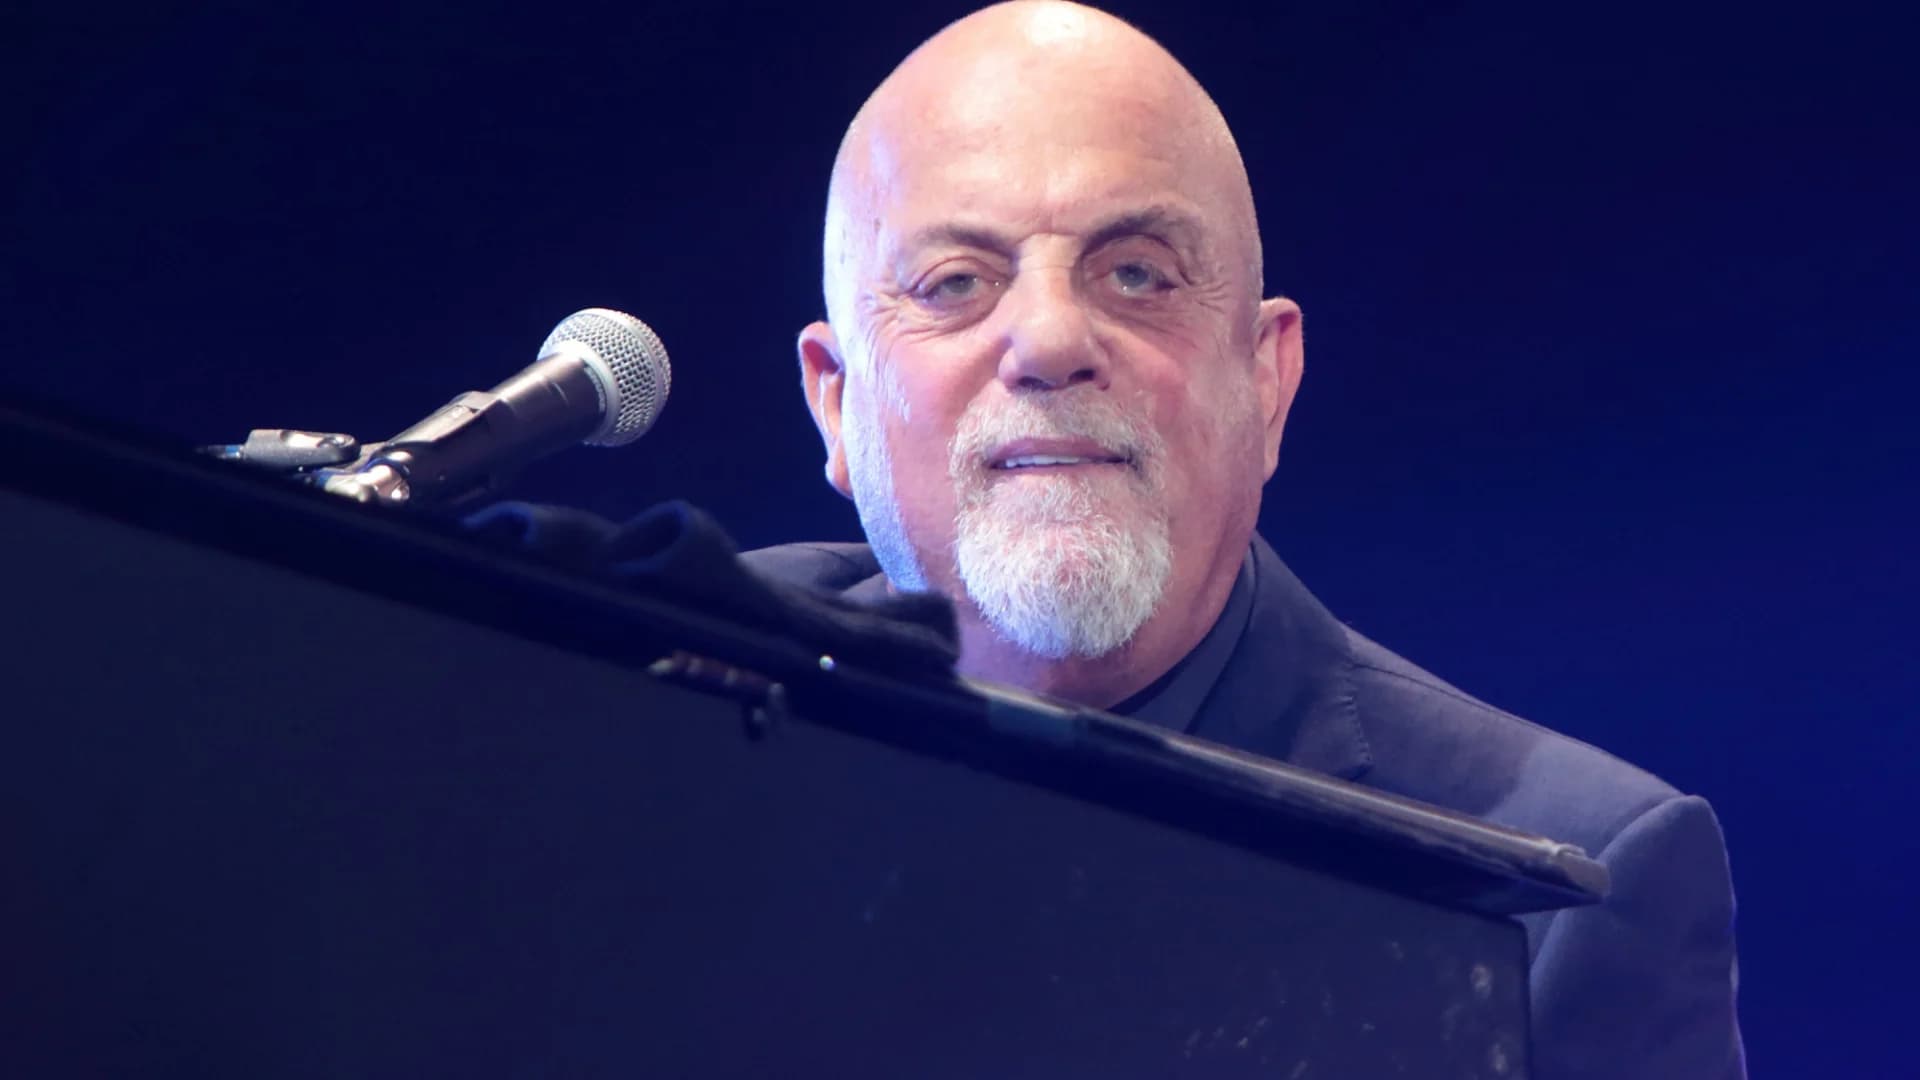 Billy Joel returns to Madison Square Garden after COVID-19 postponement